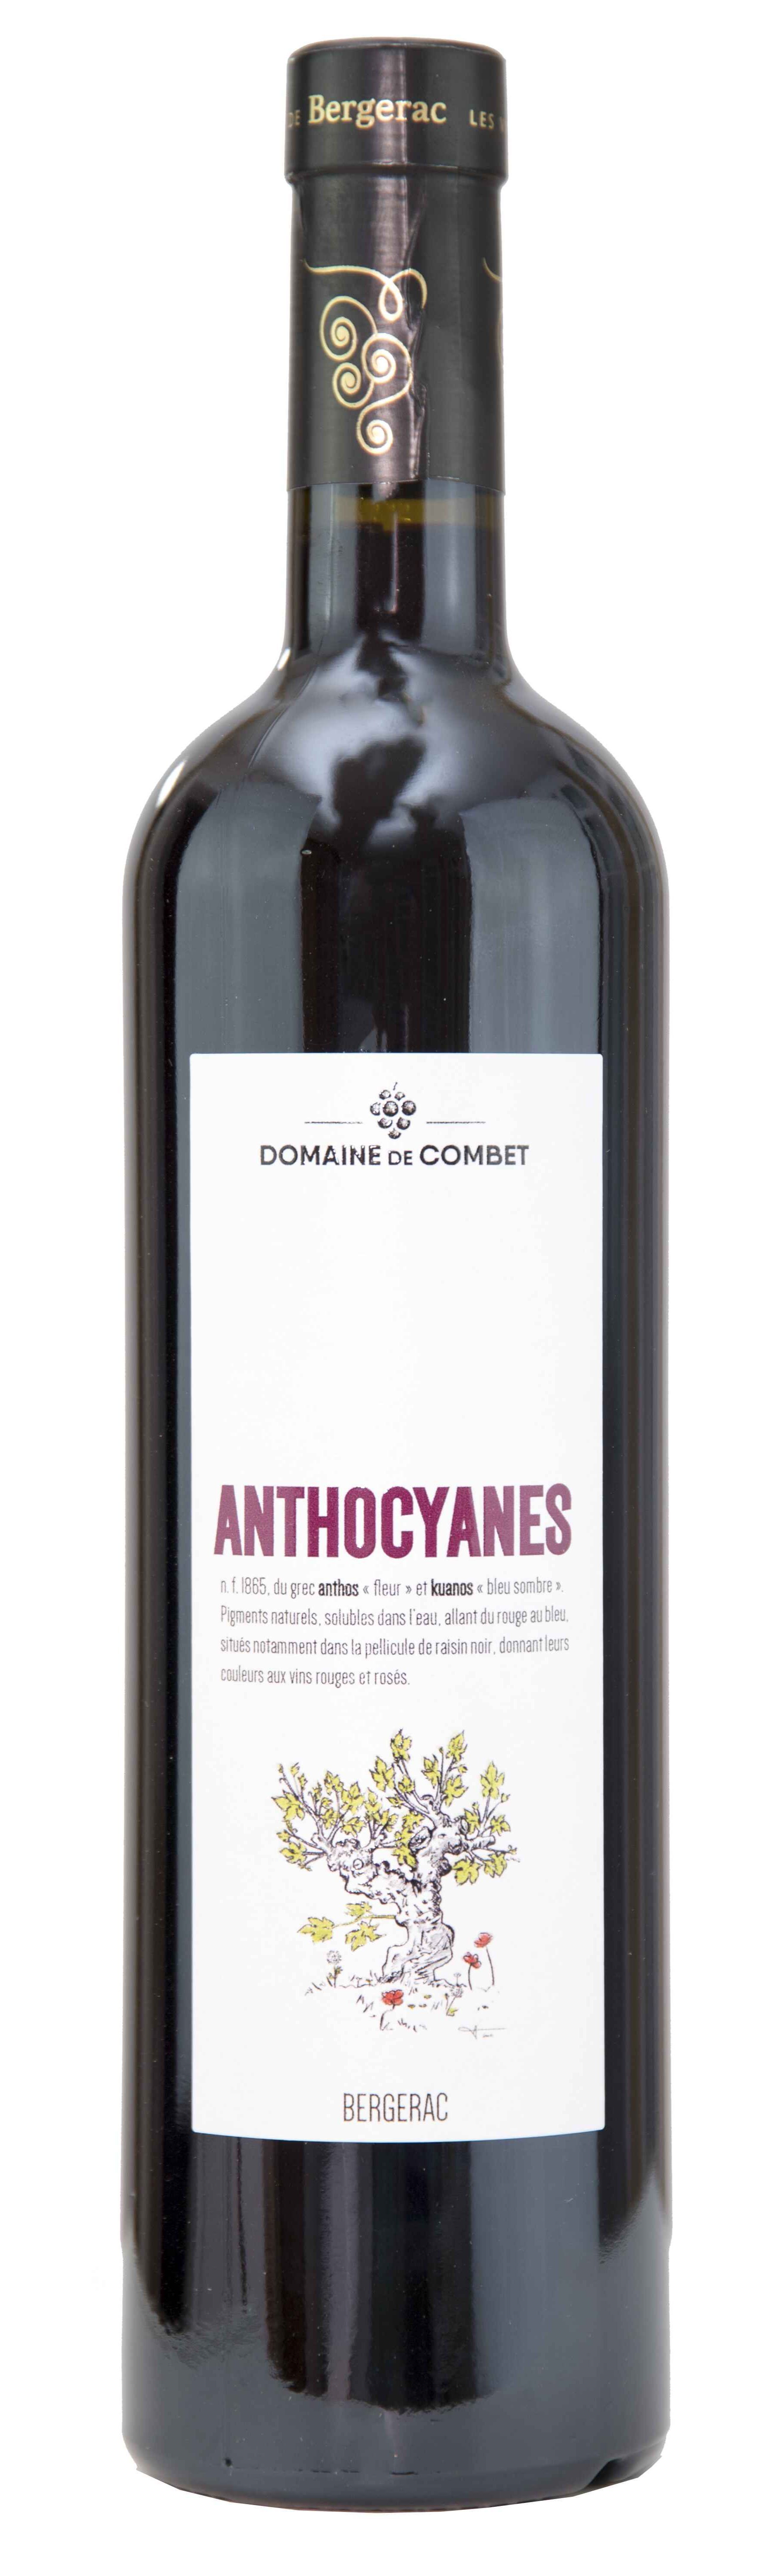 Earl de Combet ANTHOCYANES, Red, 2021, Bergerac. Bottle image